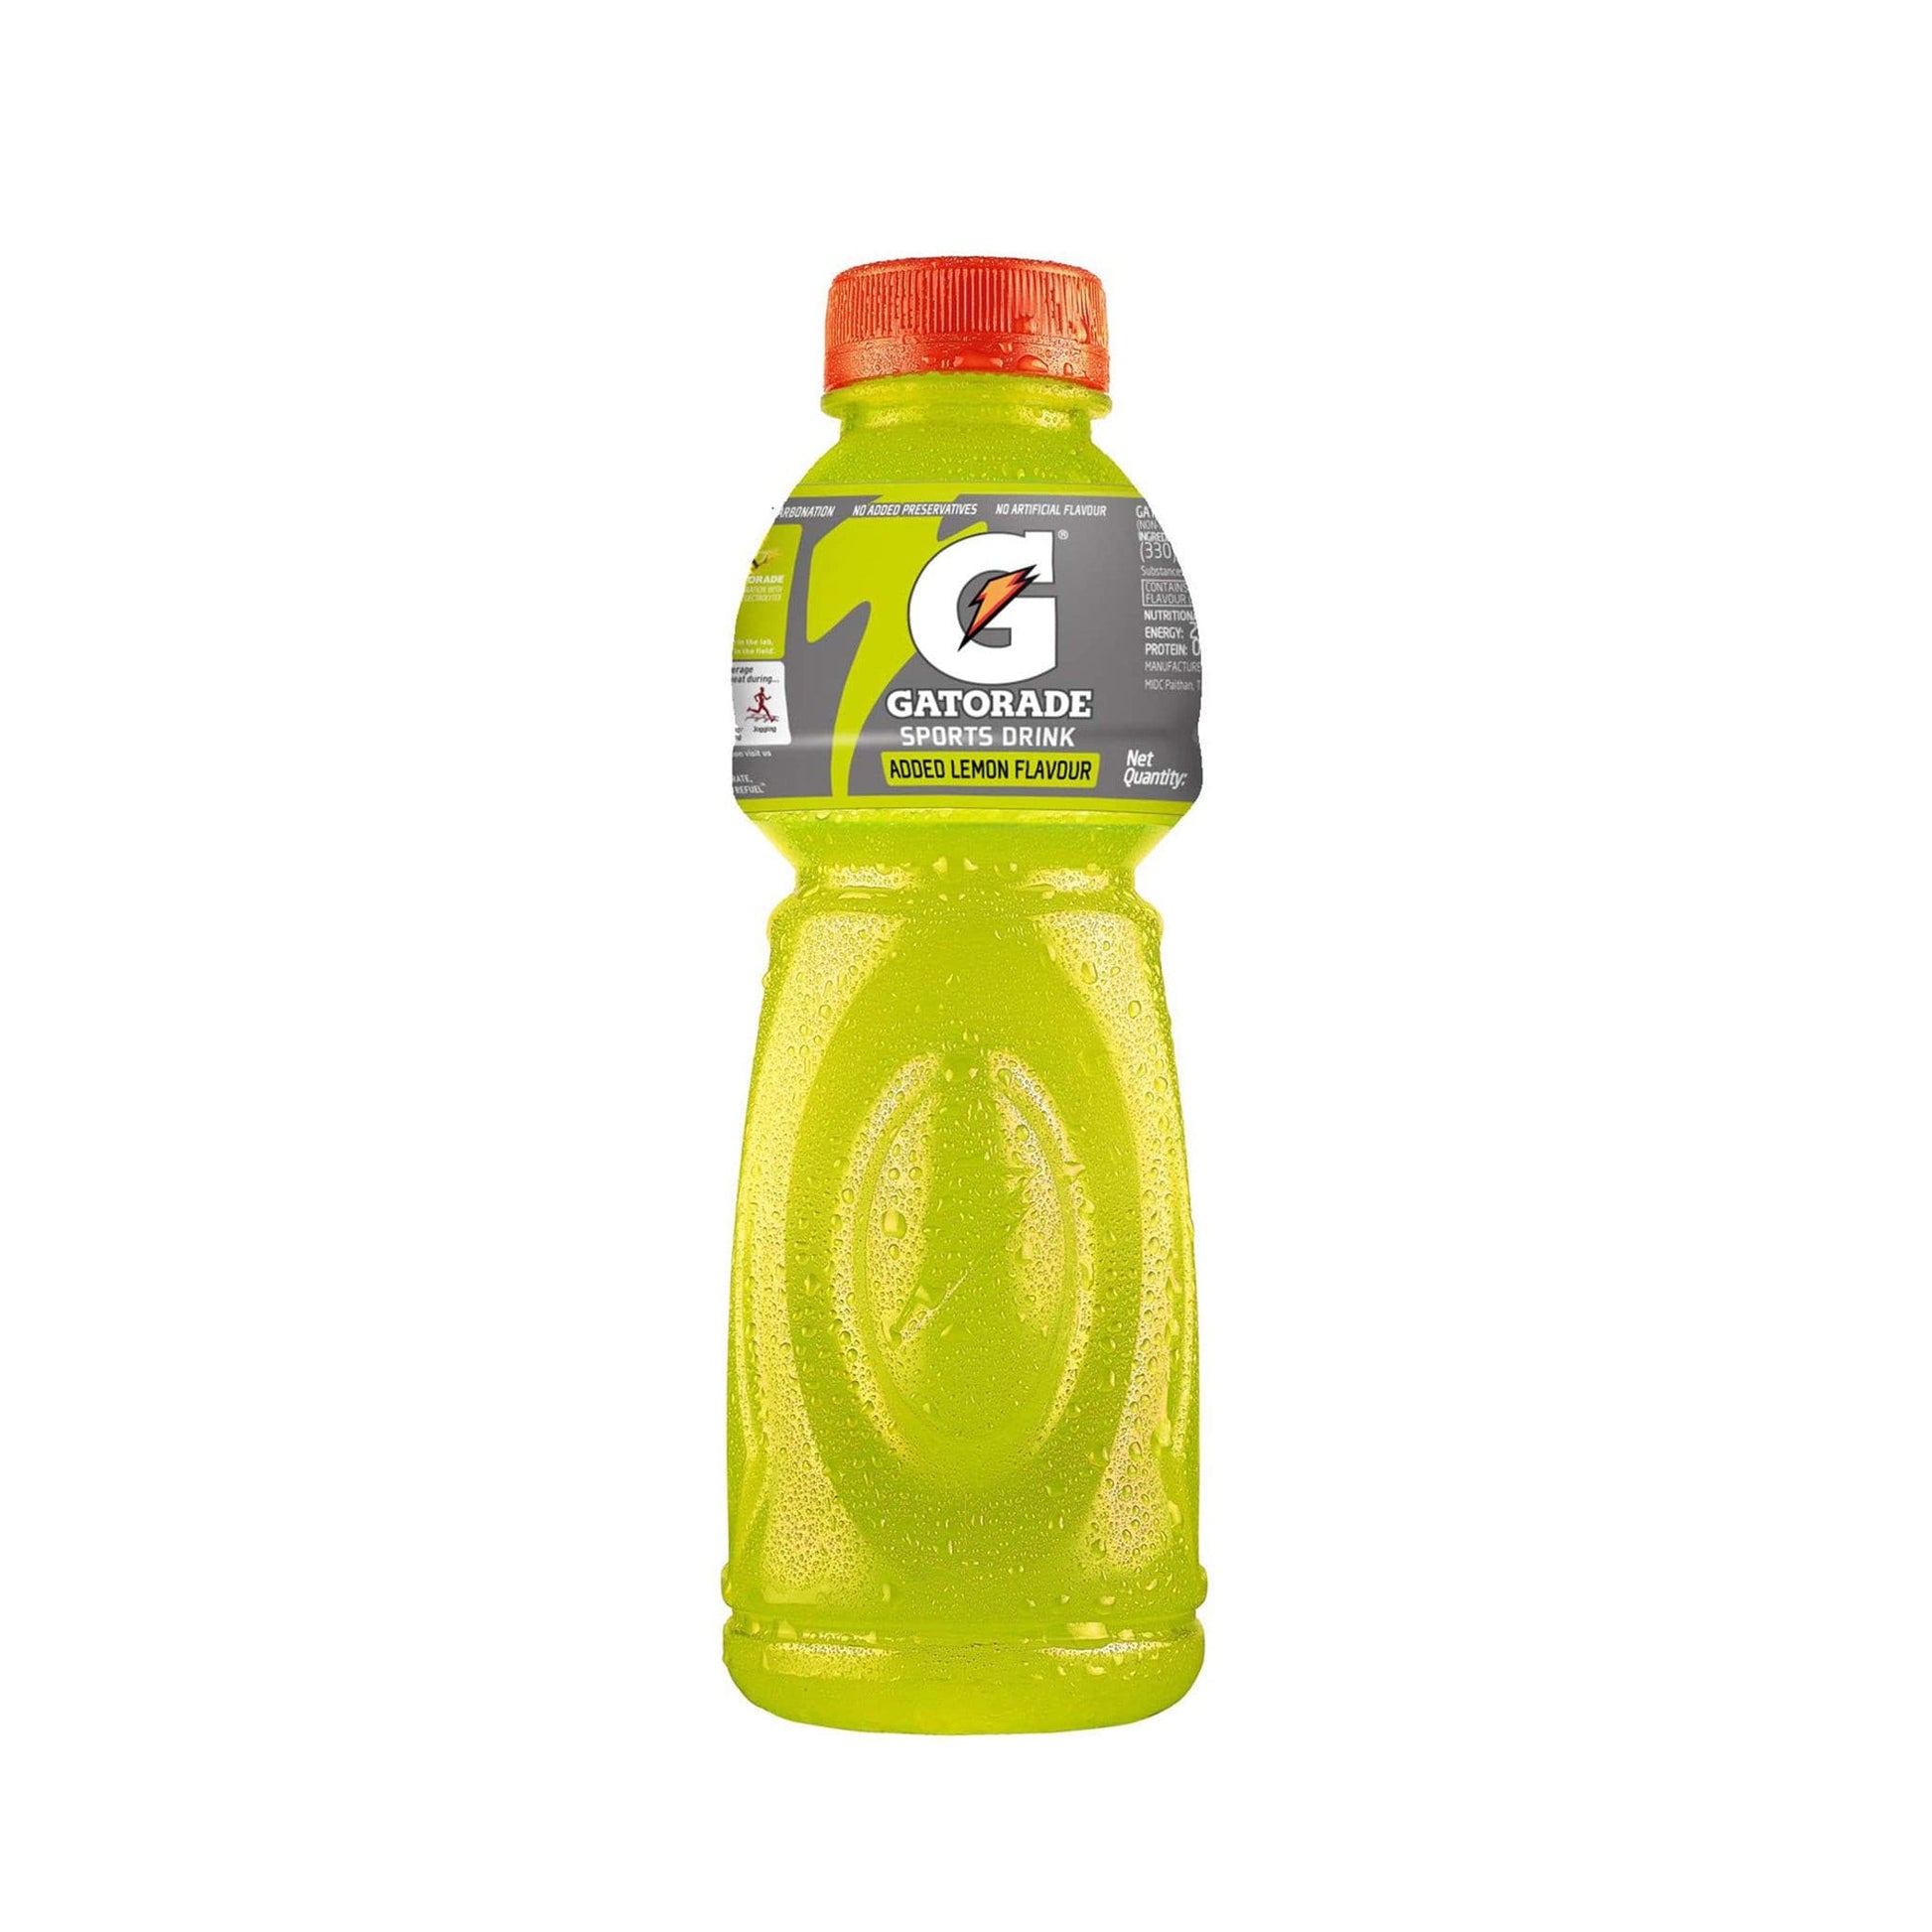 Gatorade Sports Drink - Lemon Flavour.